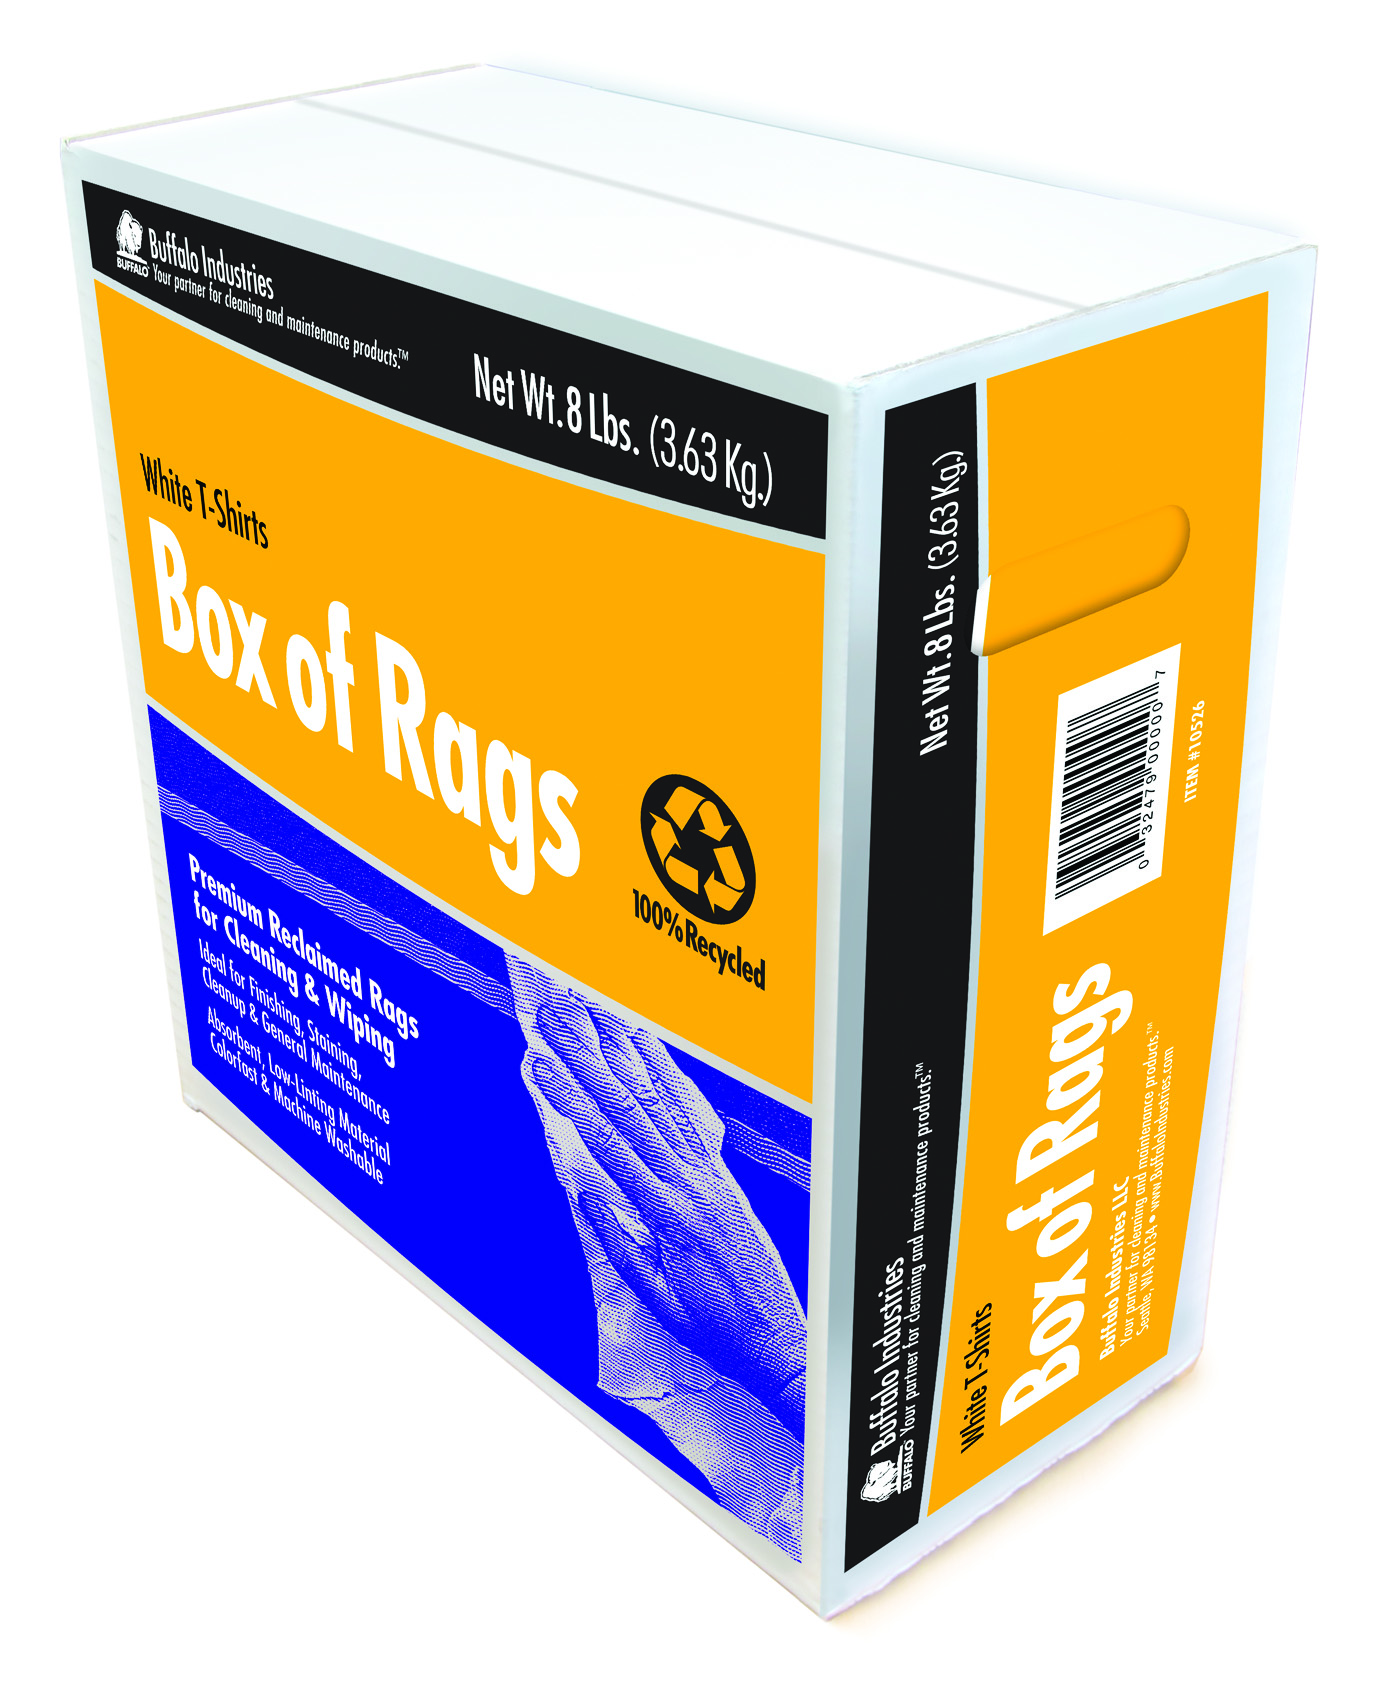 Rag Type Guide  Buffalo Industries LLC